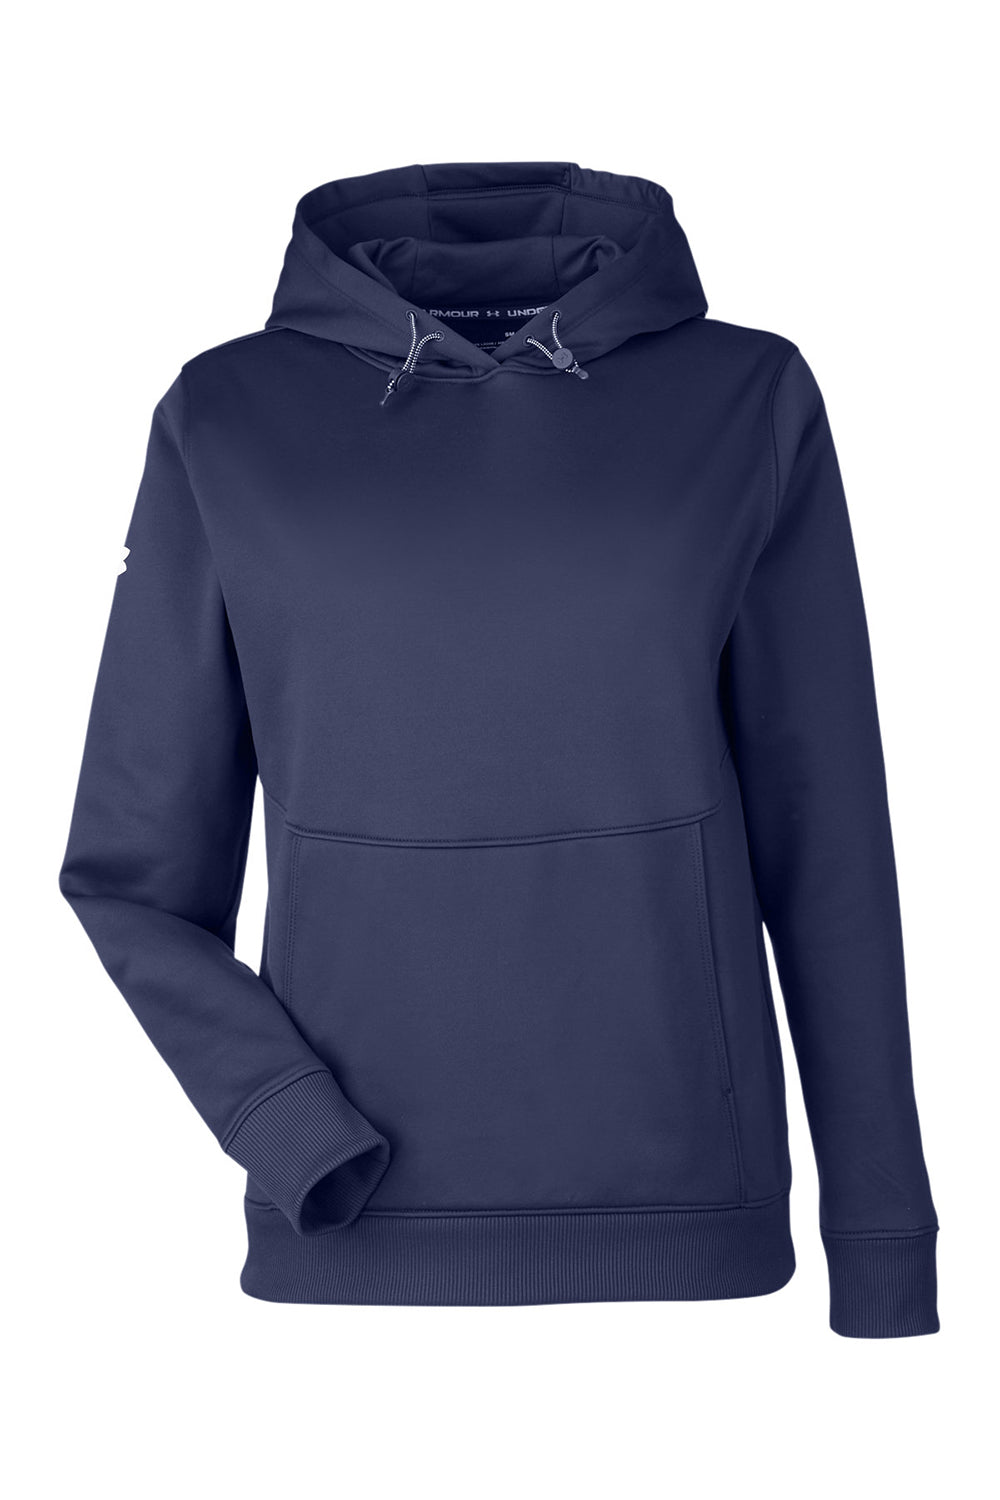 Under Armour 1370425 Womens Storm Armourfleece Water Resistant Hooded Sweatshirt Hoodie Midnight Navy Blue Flat Front